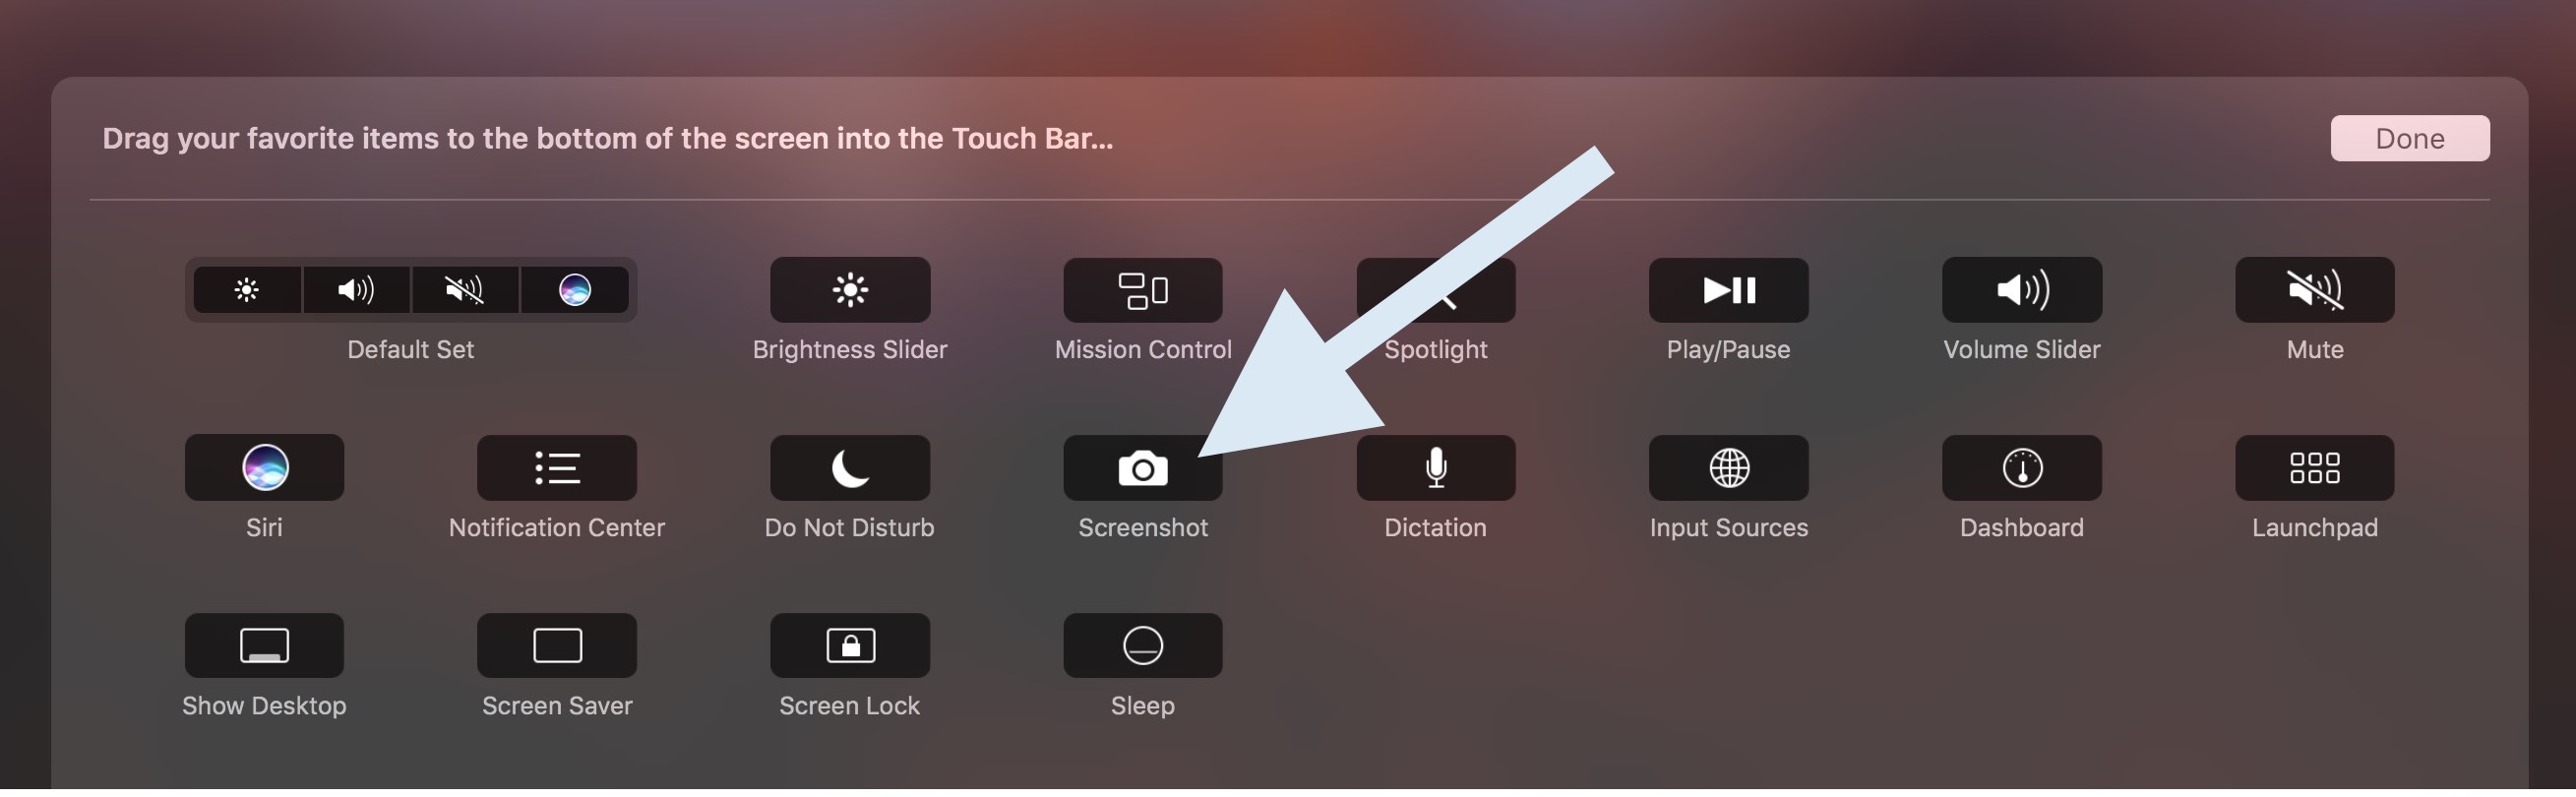 how to take screenshot on mac pro